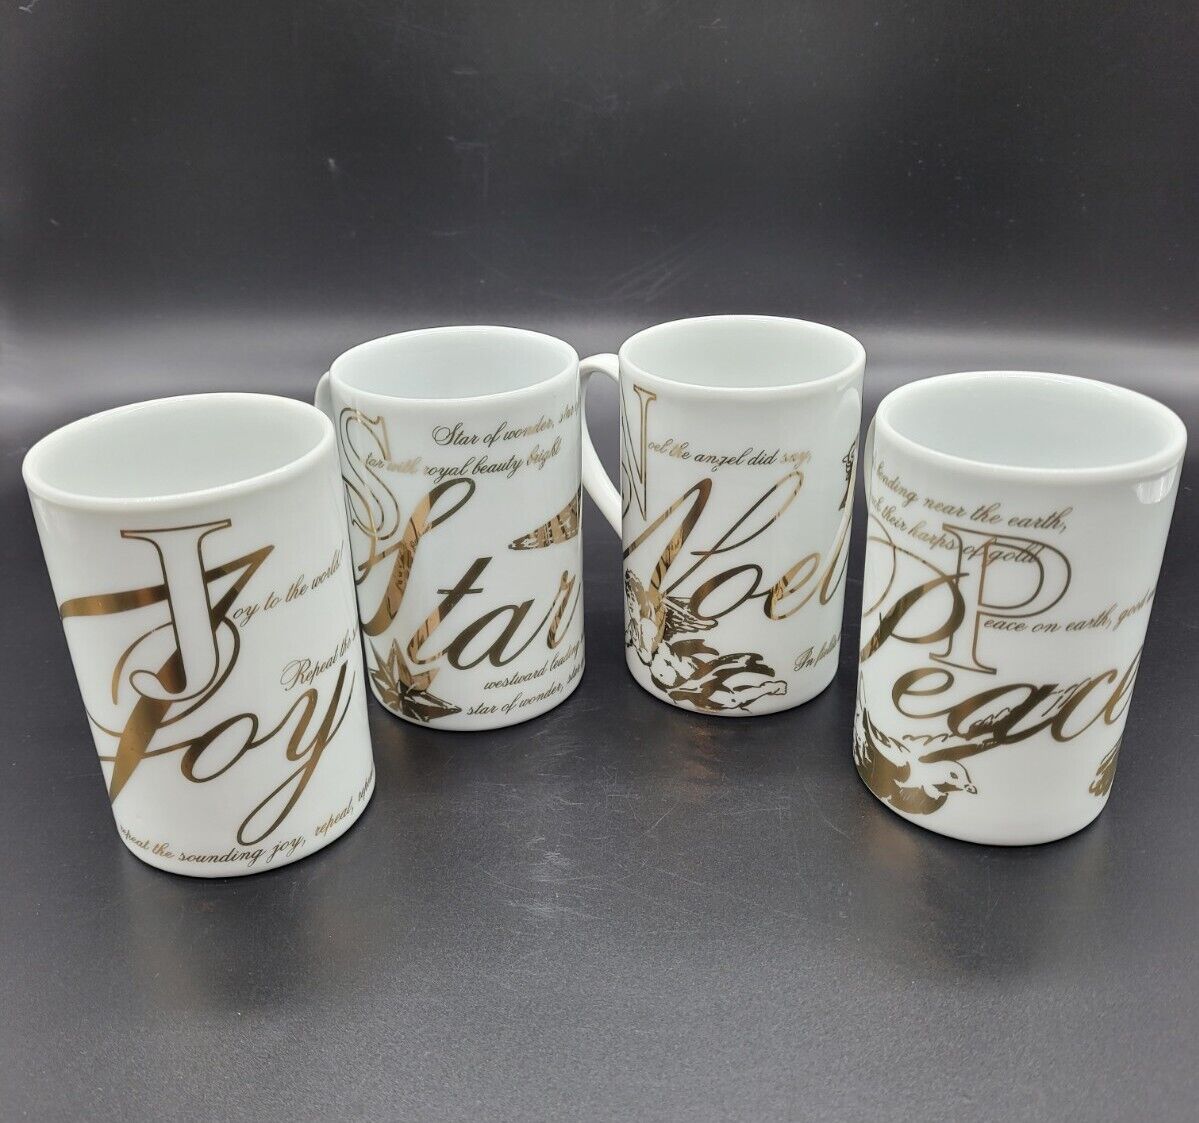  Christmas Mugs Prejecting 2500  LTD Gold & White set Of 4 Vintage